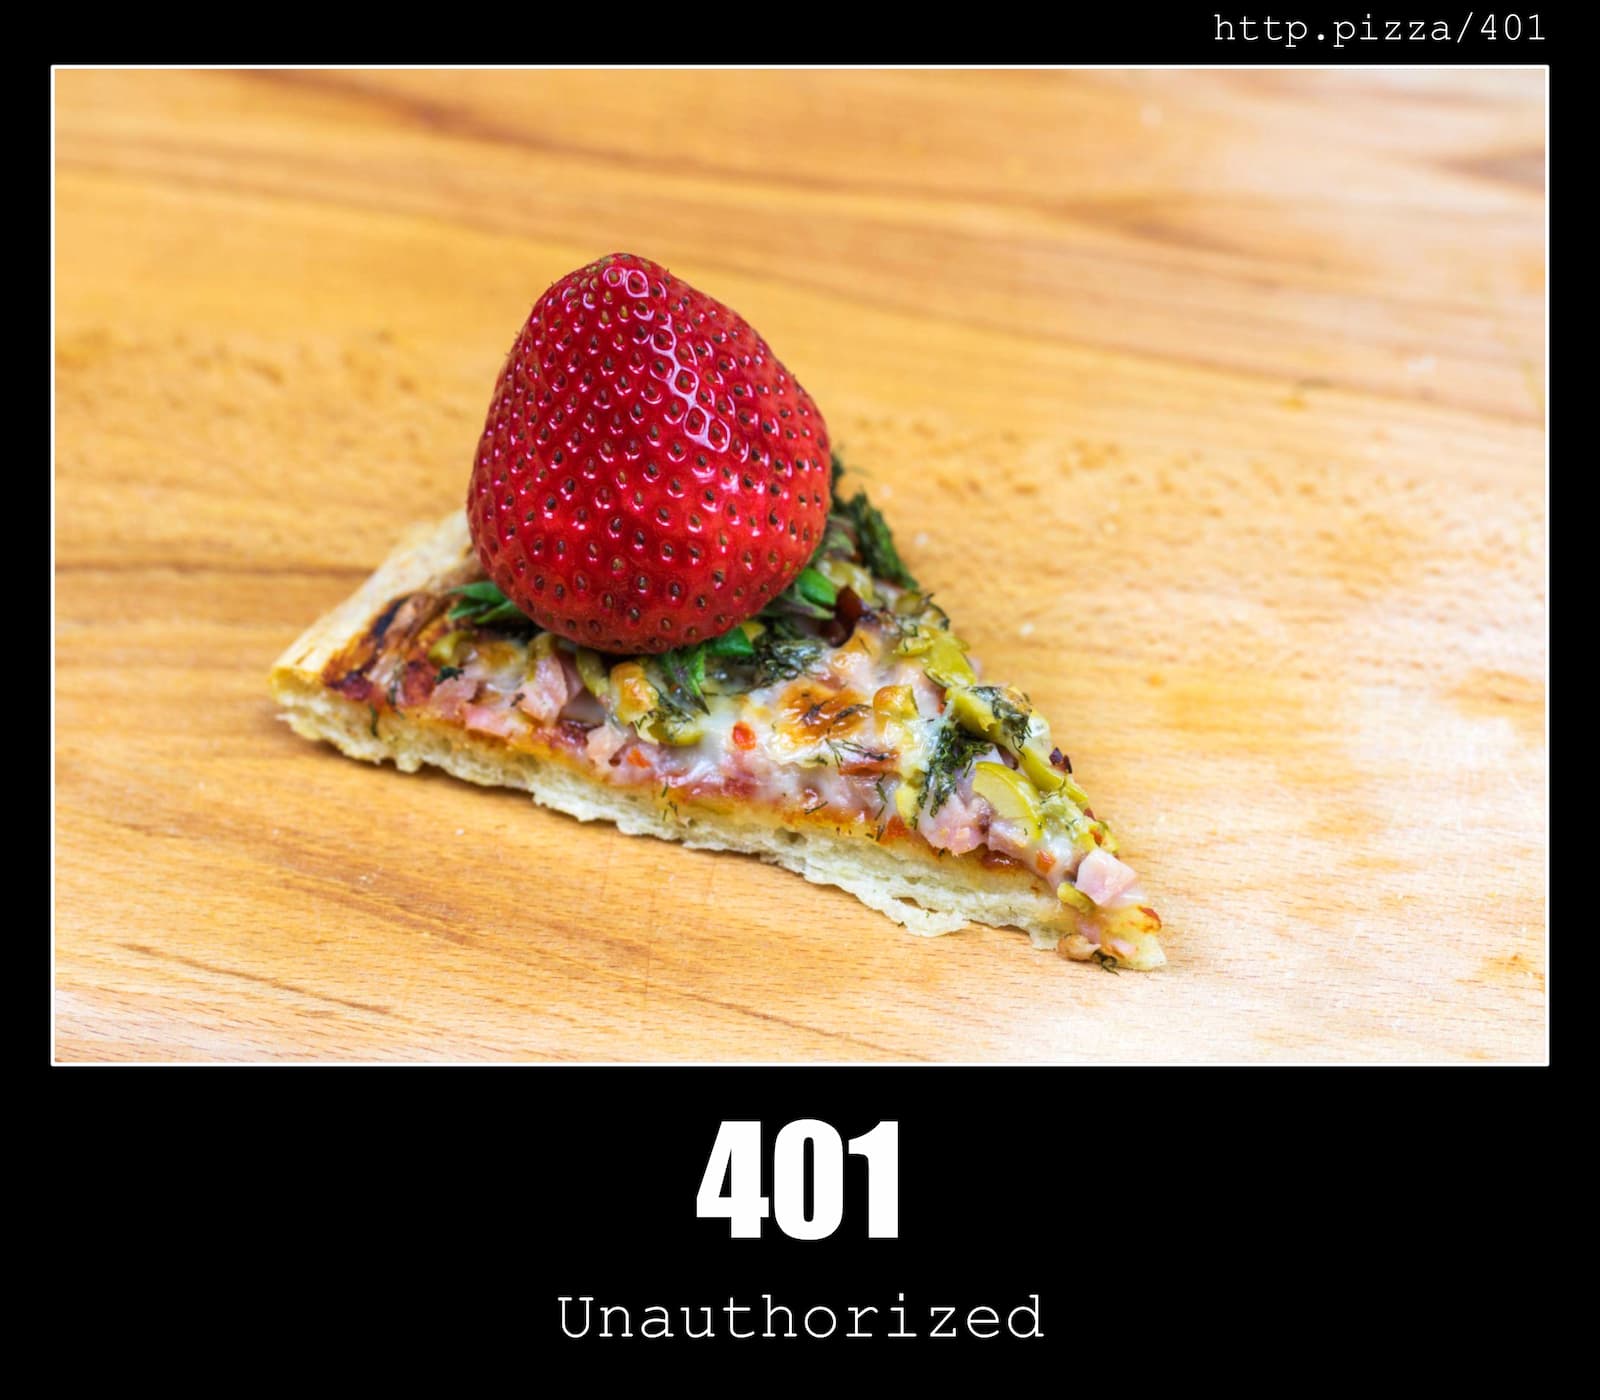 HTTP Status Code 401 Unauthorized & Pizzas